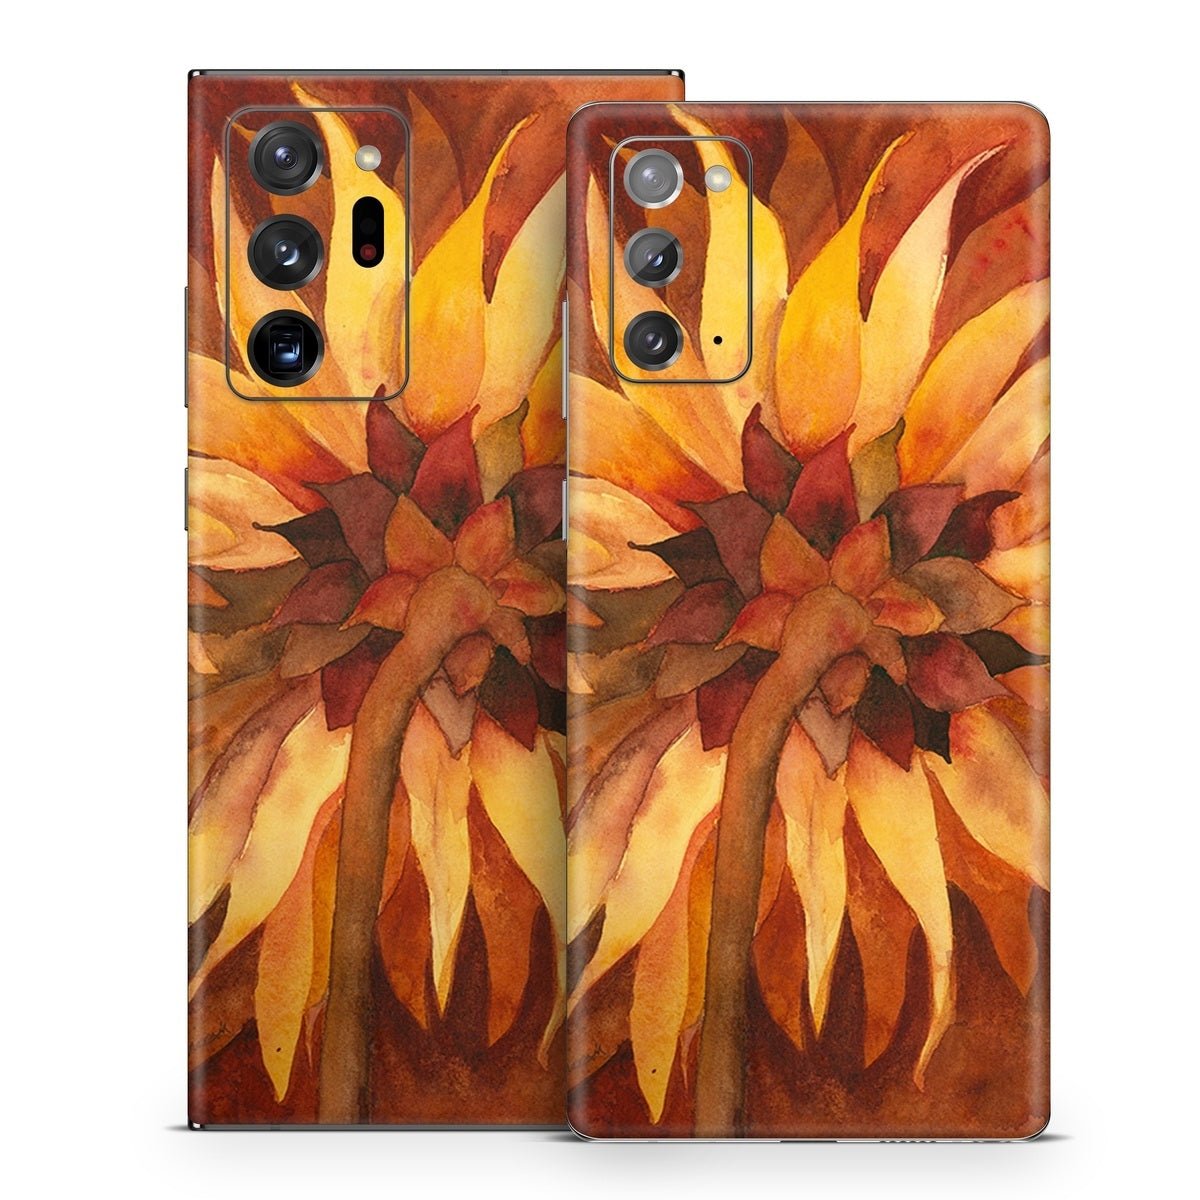 Autumn Beauty - Samsung Galaxy Note 20 Skin - Jackie Friesth - DecalGirl